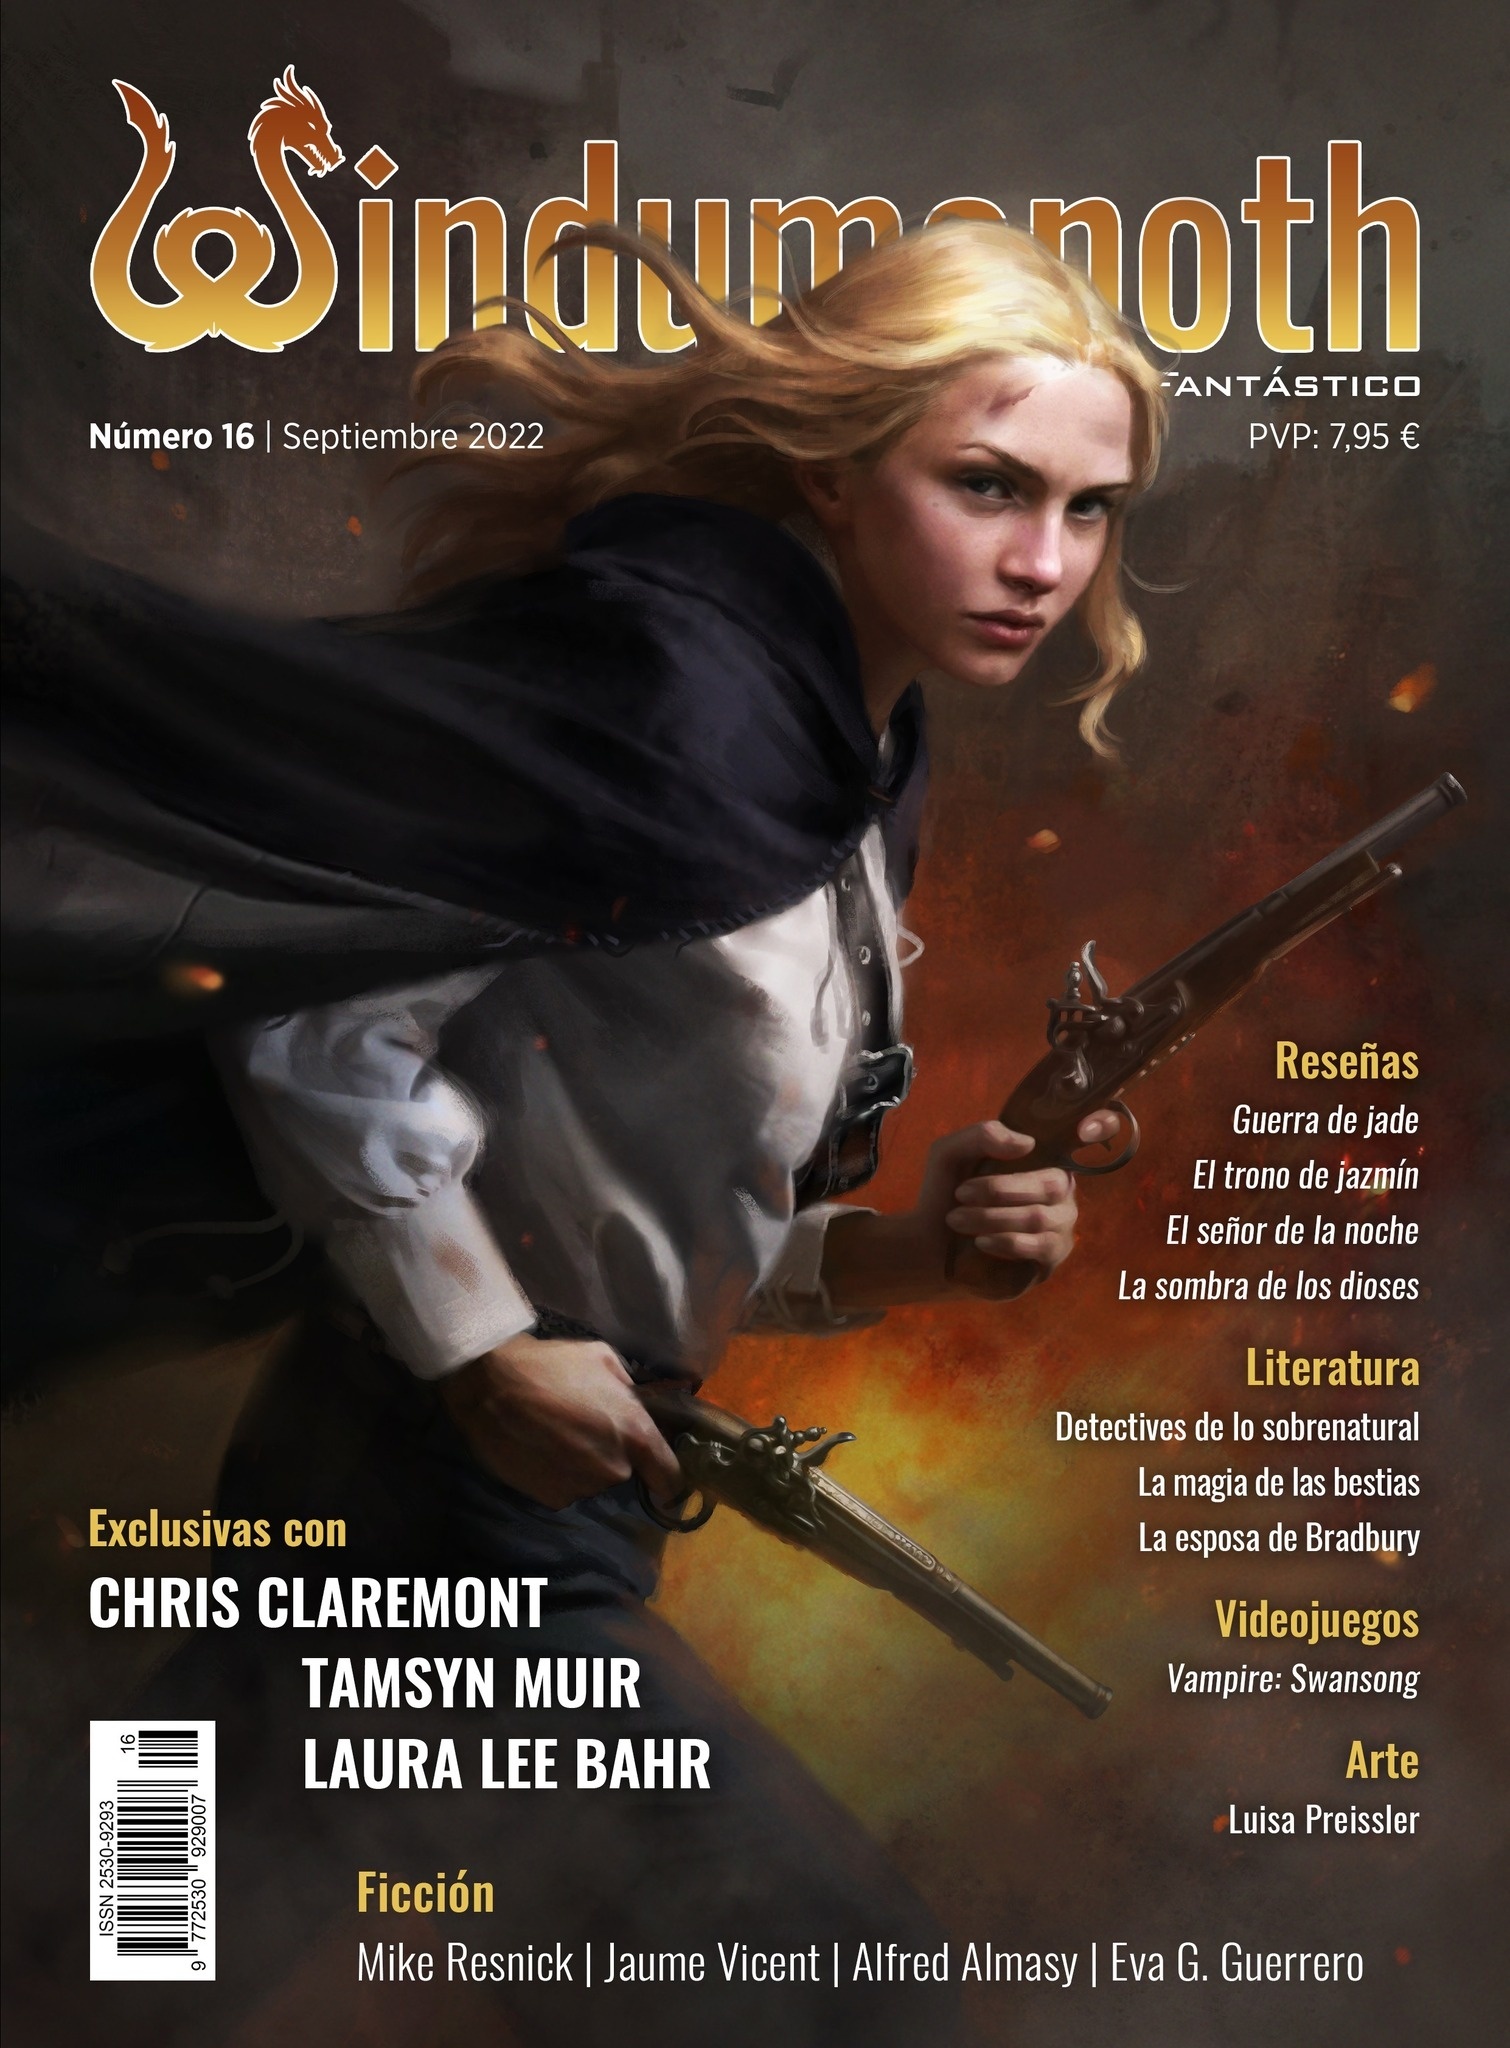 Windumanoth nº 16. Septiembre 2022 "Revista de género fantástico"